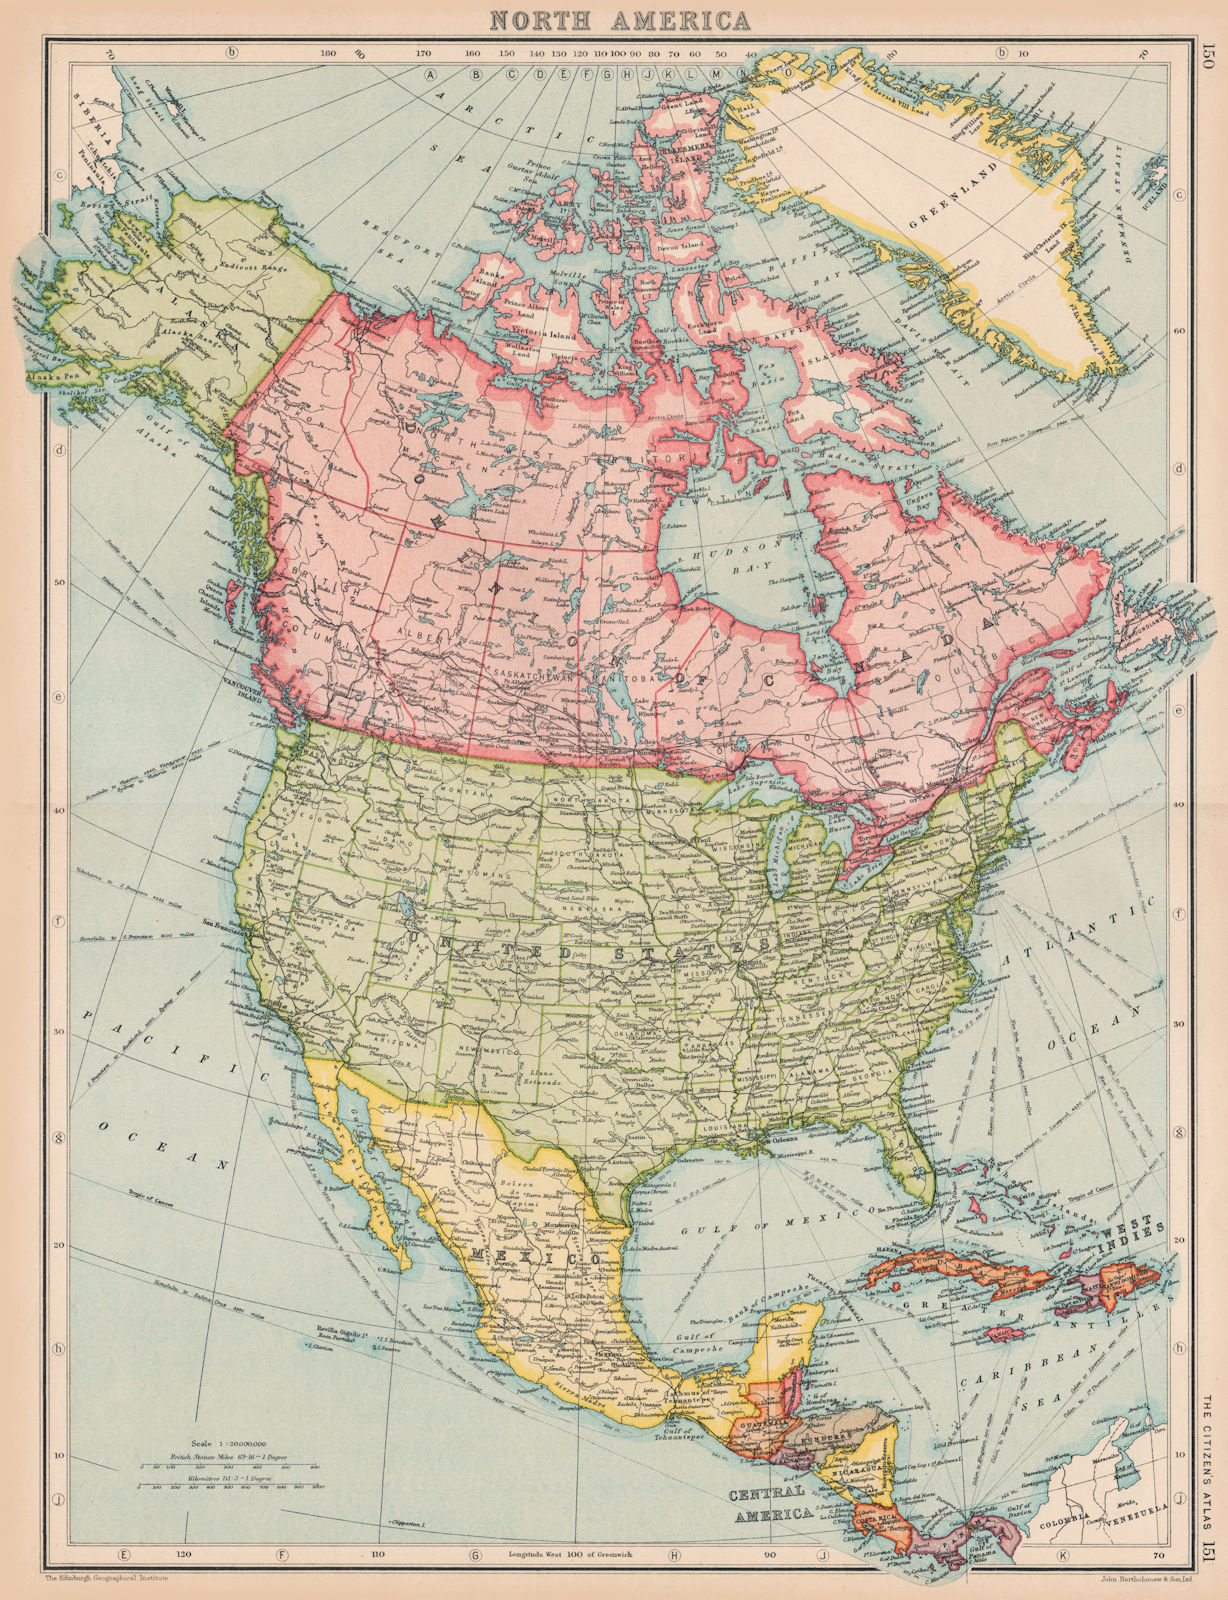 Associate Product NORTH AMERICA. General map. BARTHOLOMEW 1924 old vintage plan chart